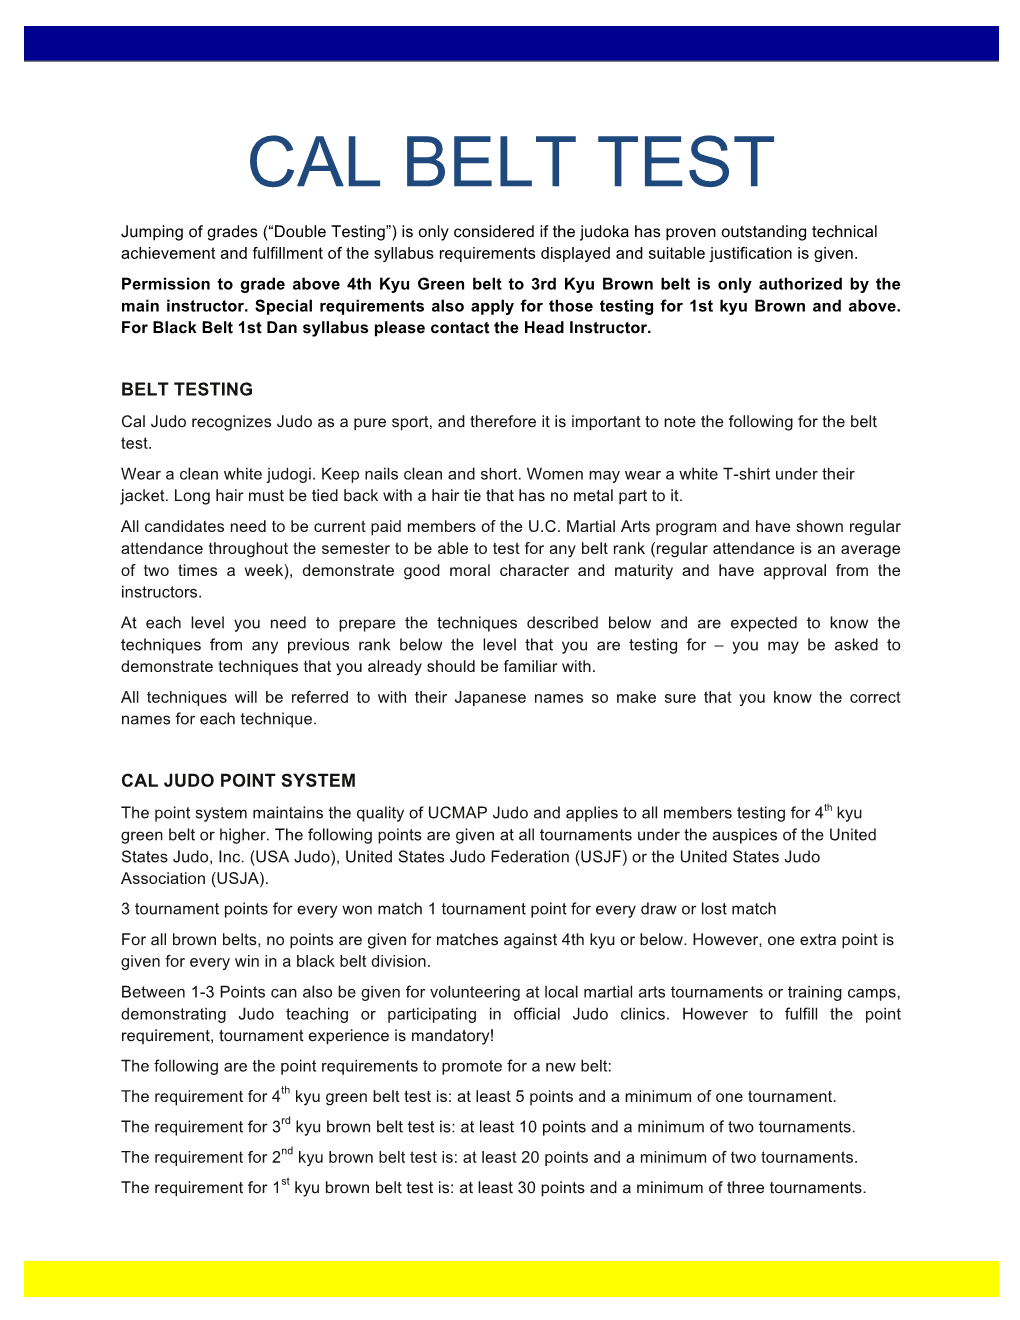 Cal Belt Test